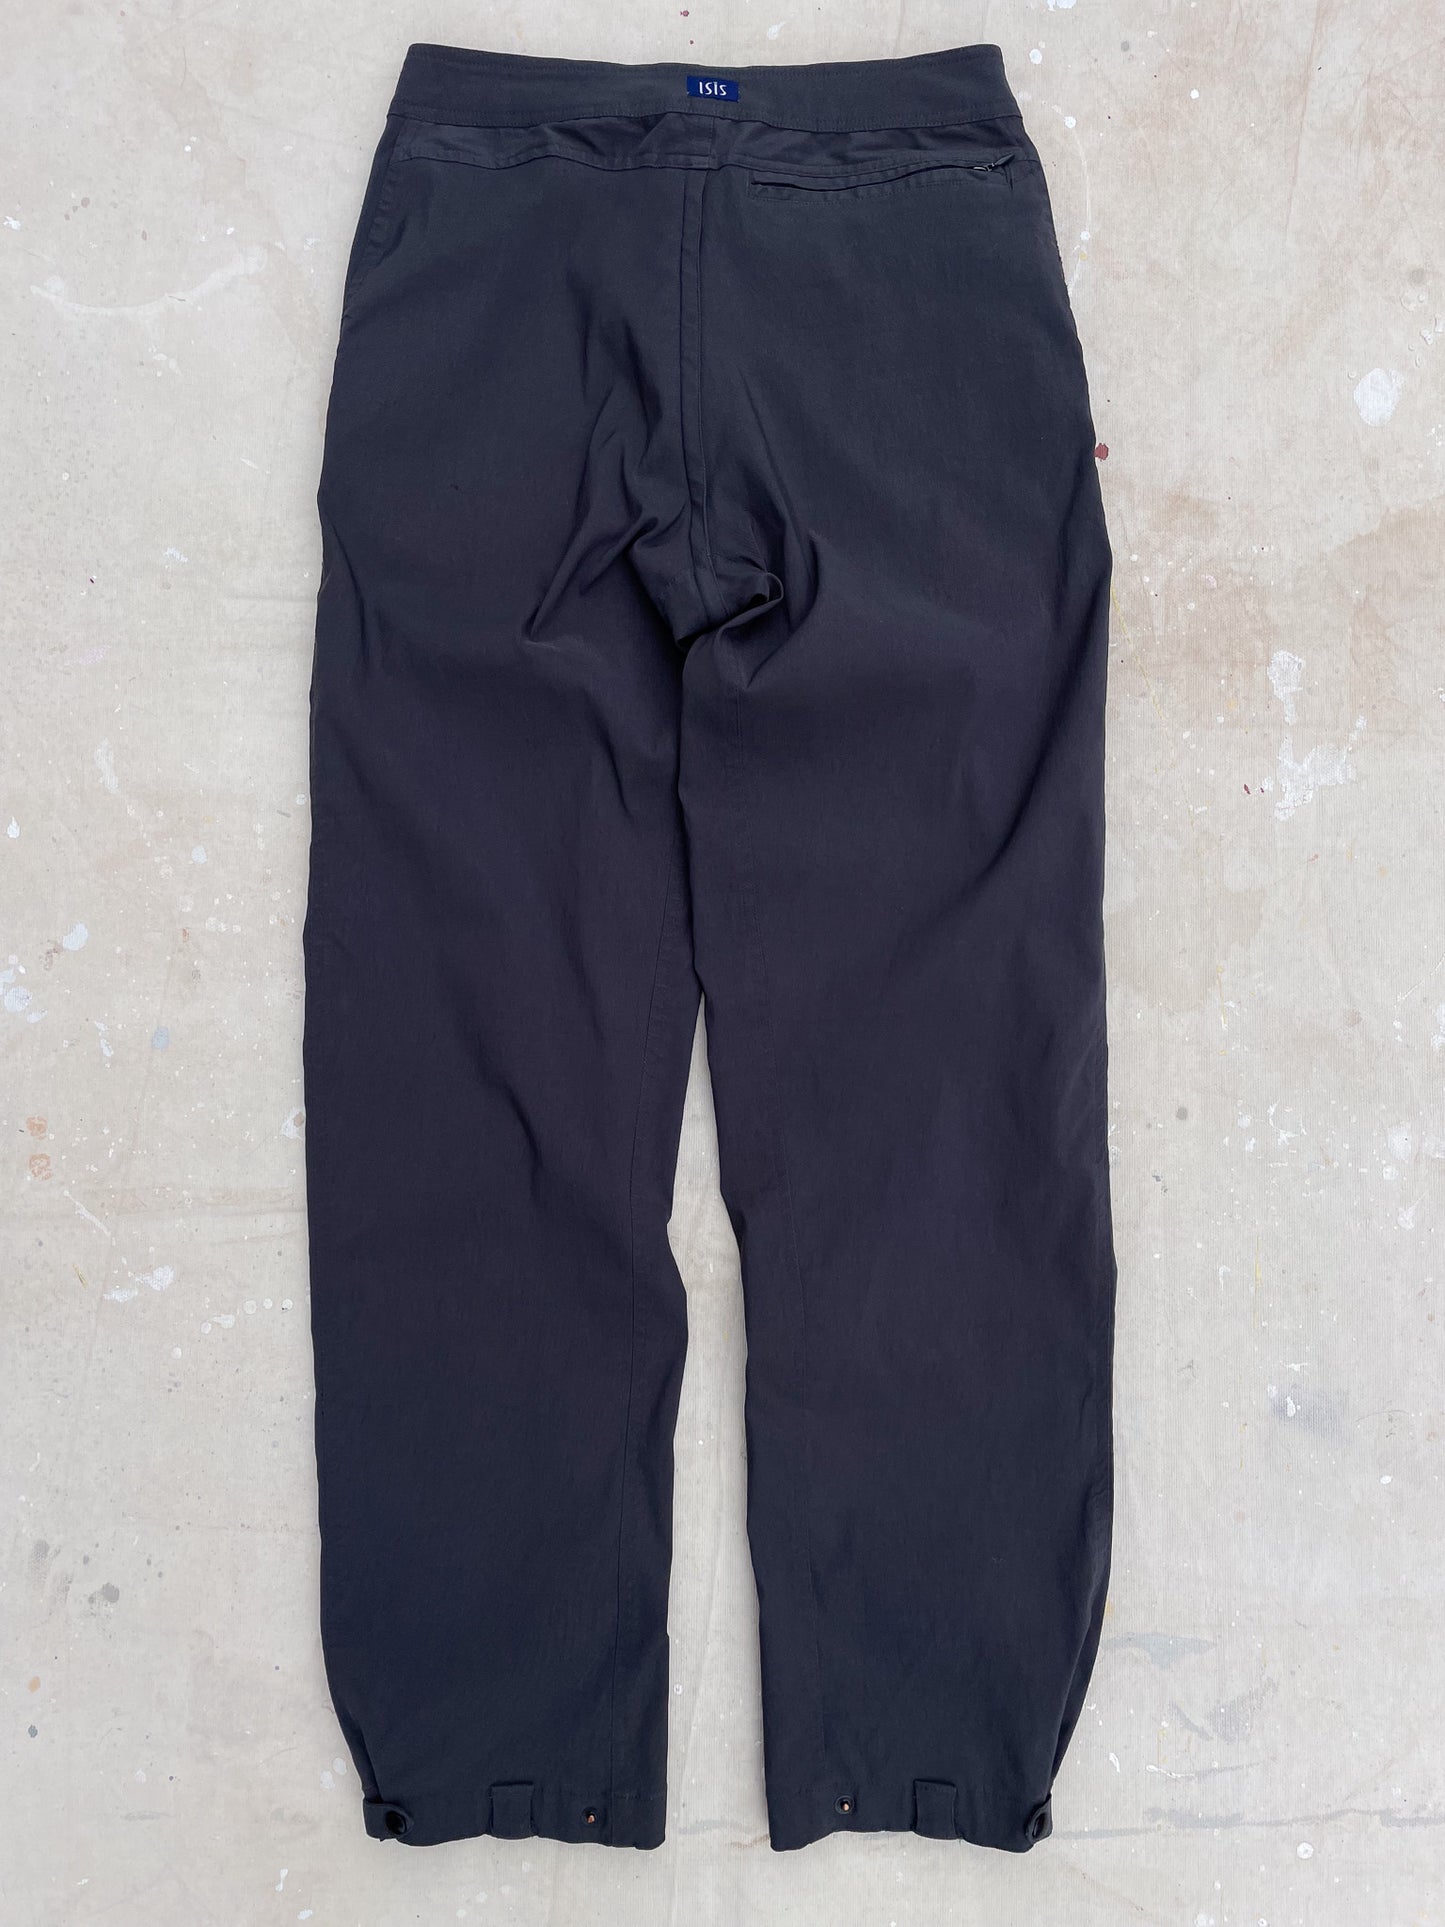 Isis Full Crotch Zip Tech Pants—[28x31]